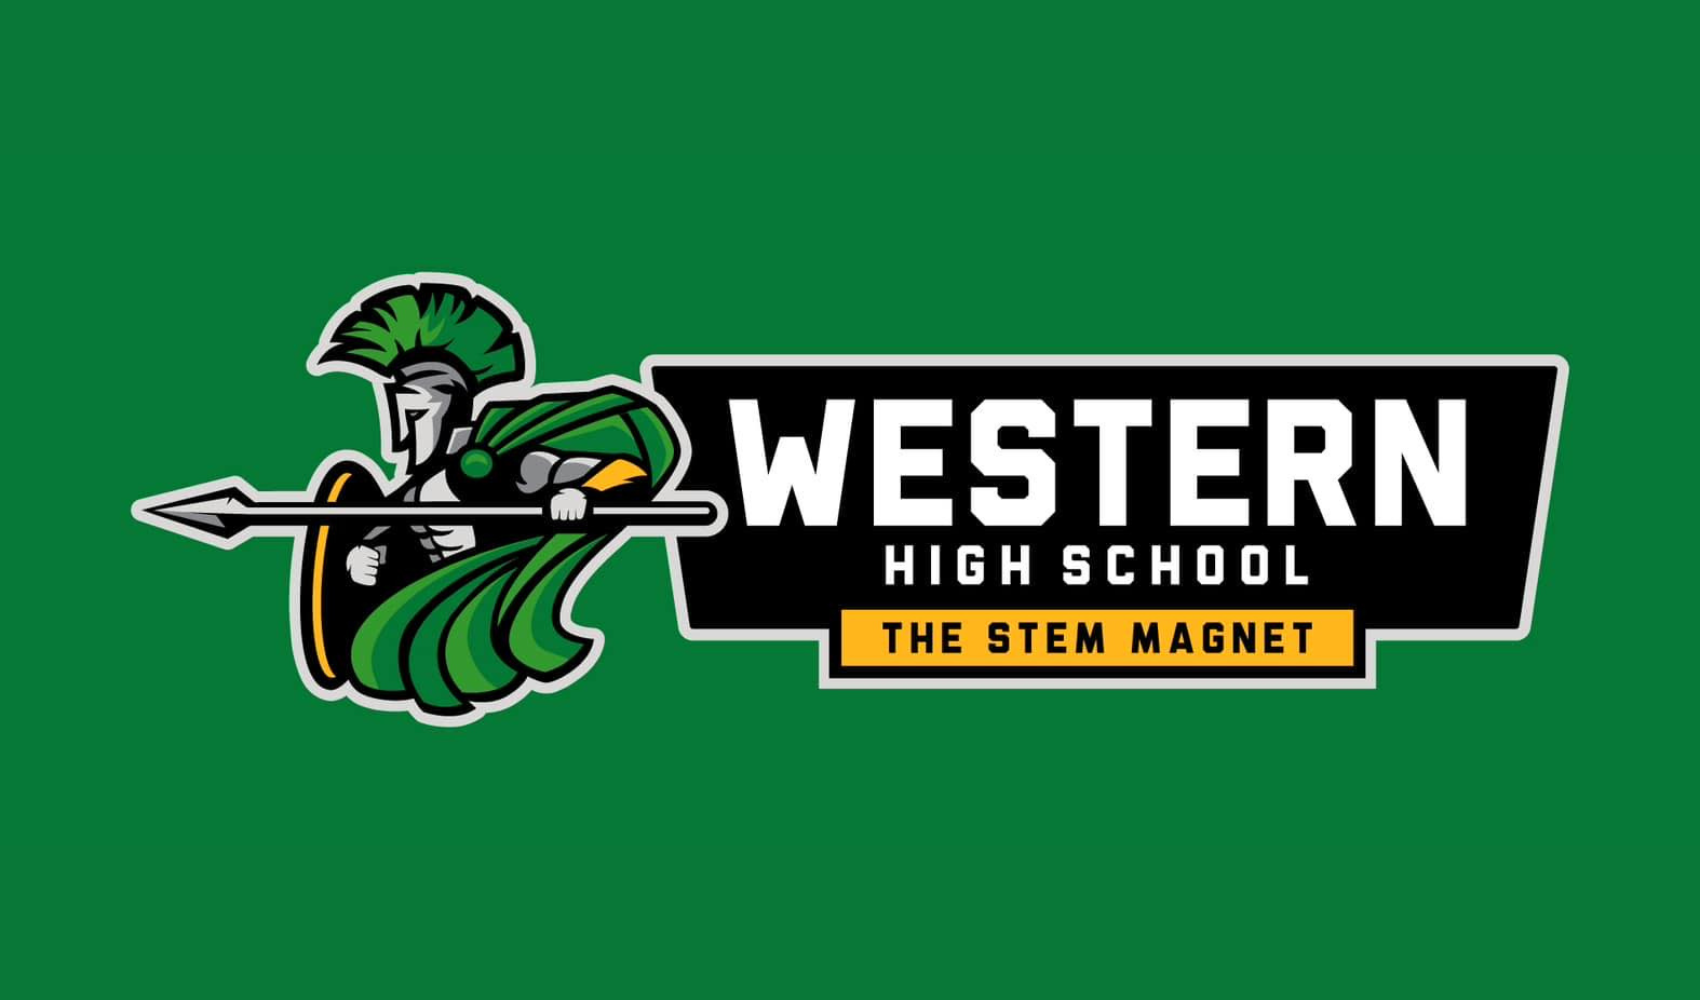 Western High School The STEM Magnet